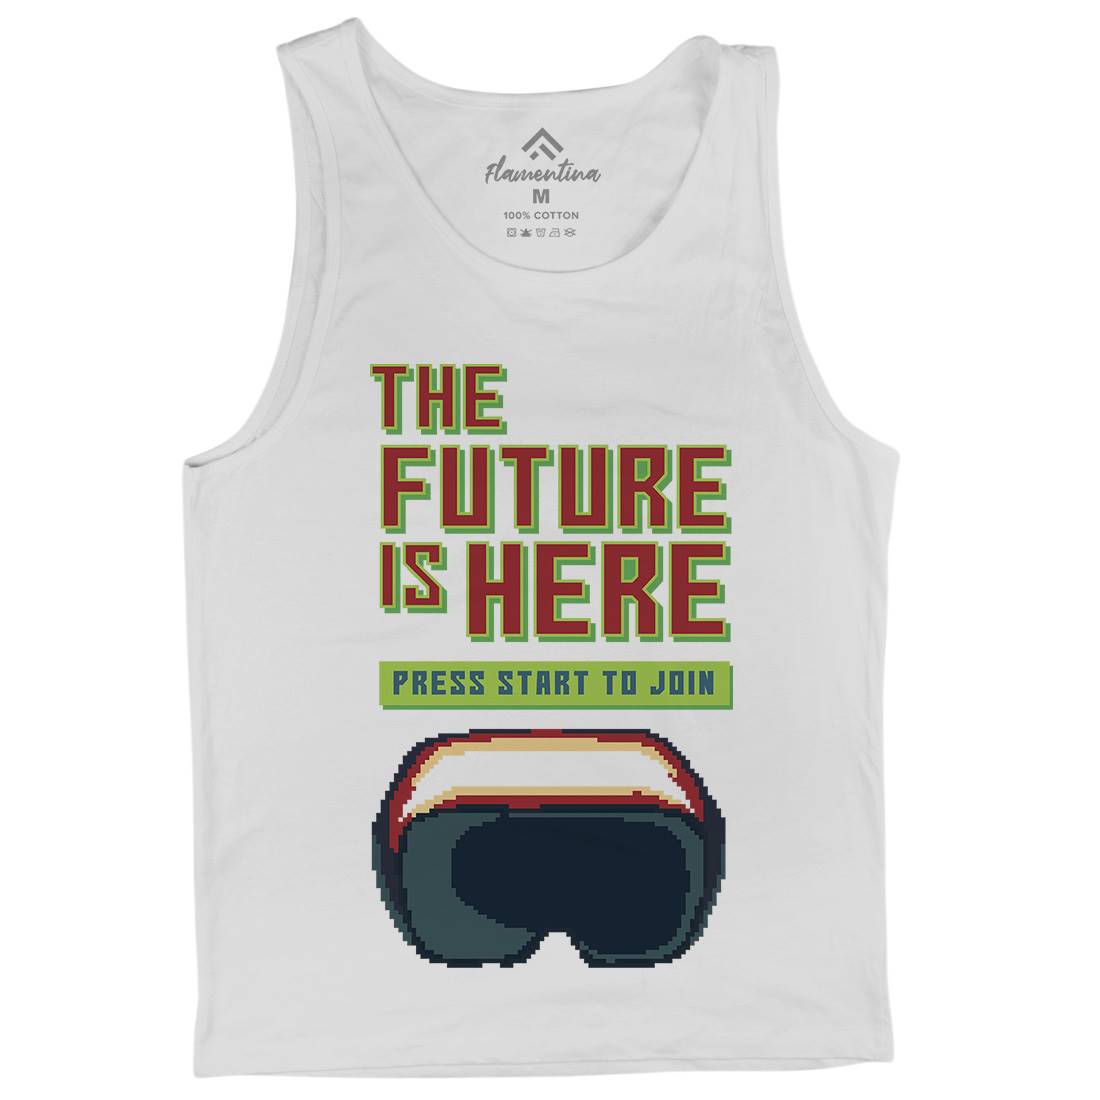 The Future Is Here Mens Tank Top Vest Geek B967